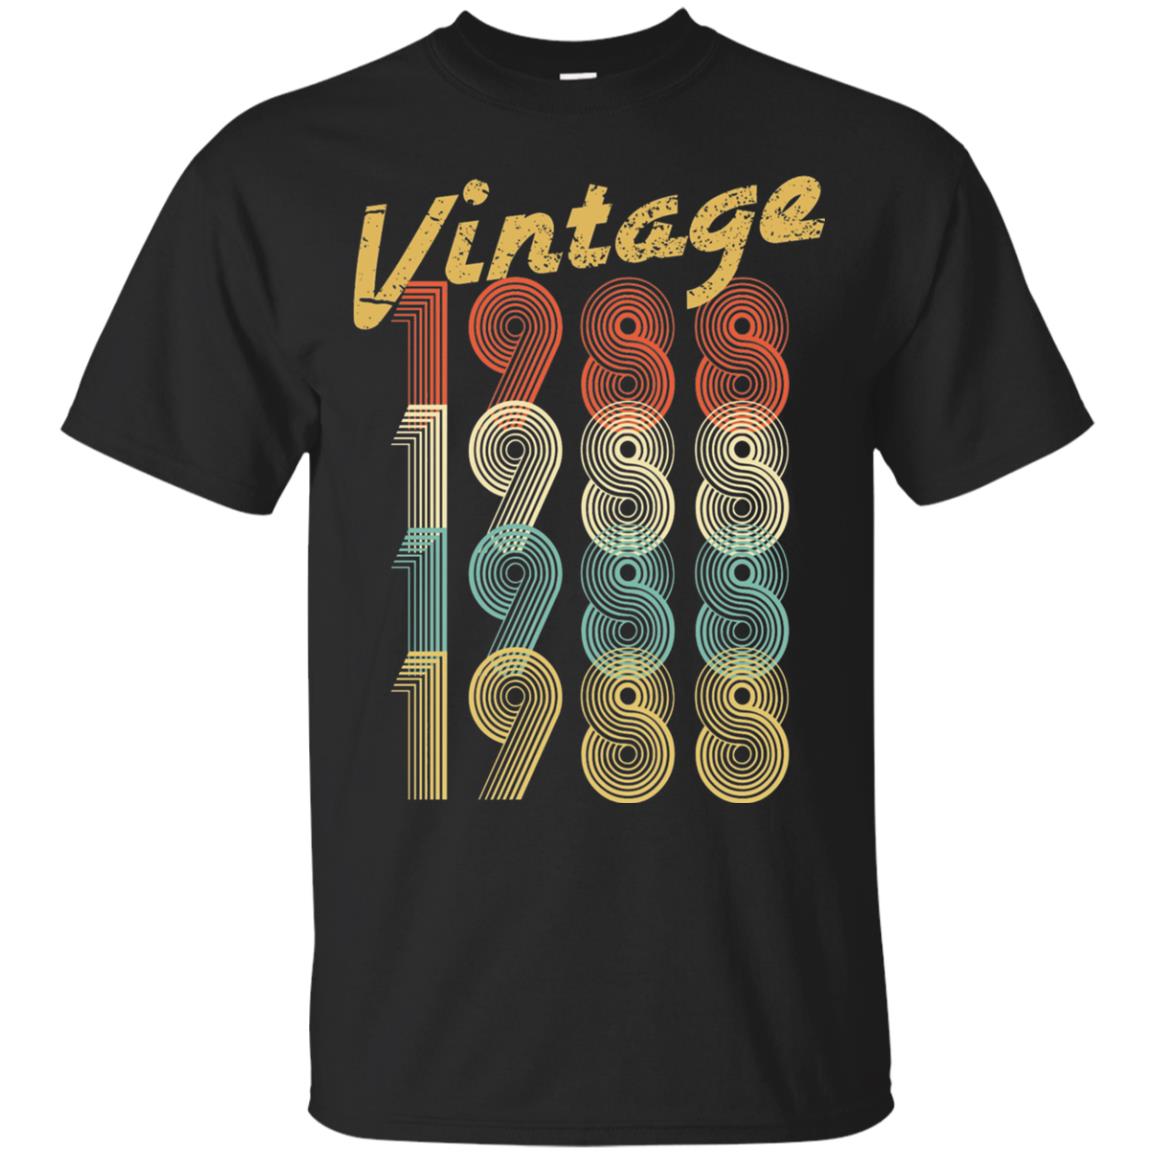 1988 Vintage Funny 30th Birthday Shirt